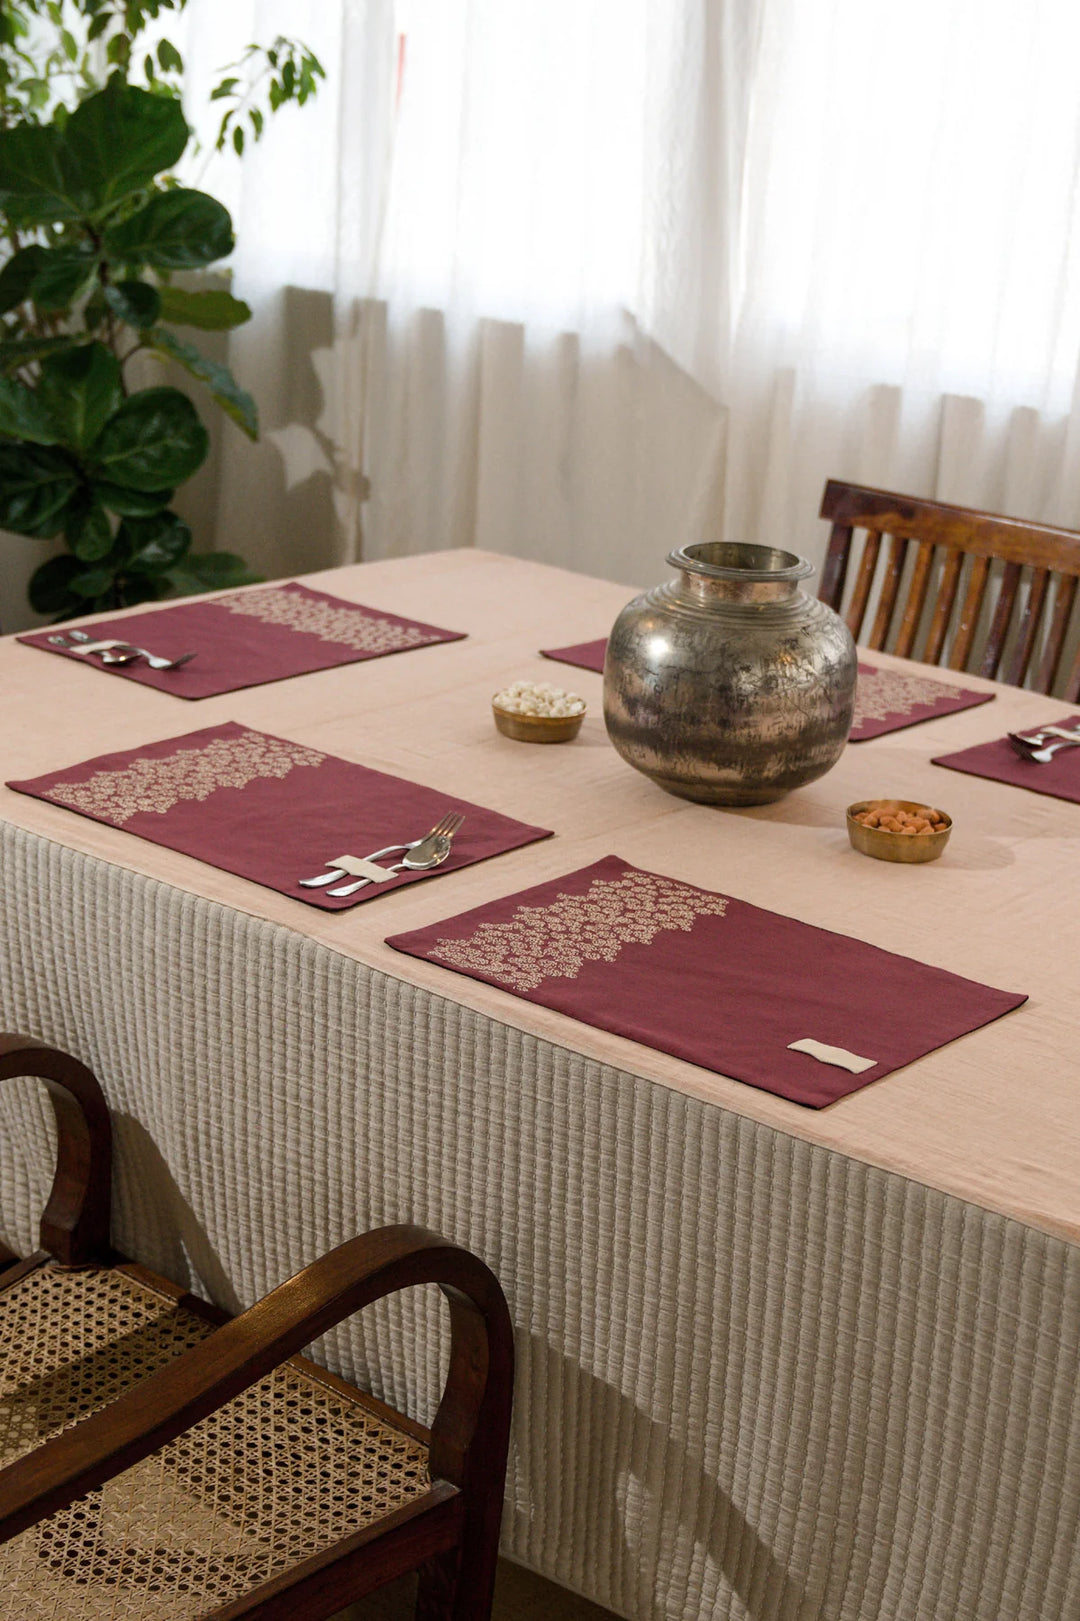 Adonis Inspired Greek Mythology Table Mats | Adonis Handwoven Table Mats Set of 6 Pcs - Maroon